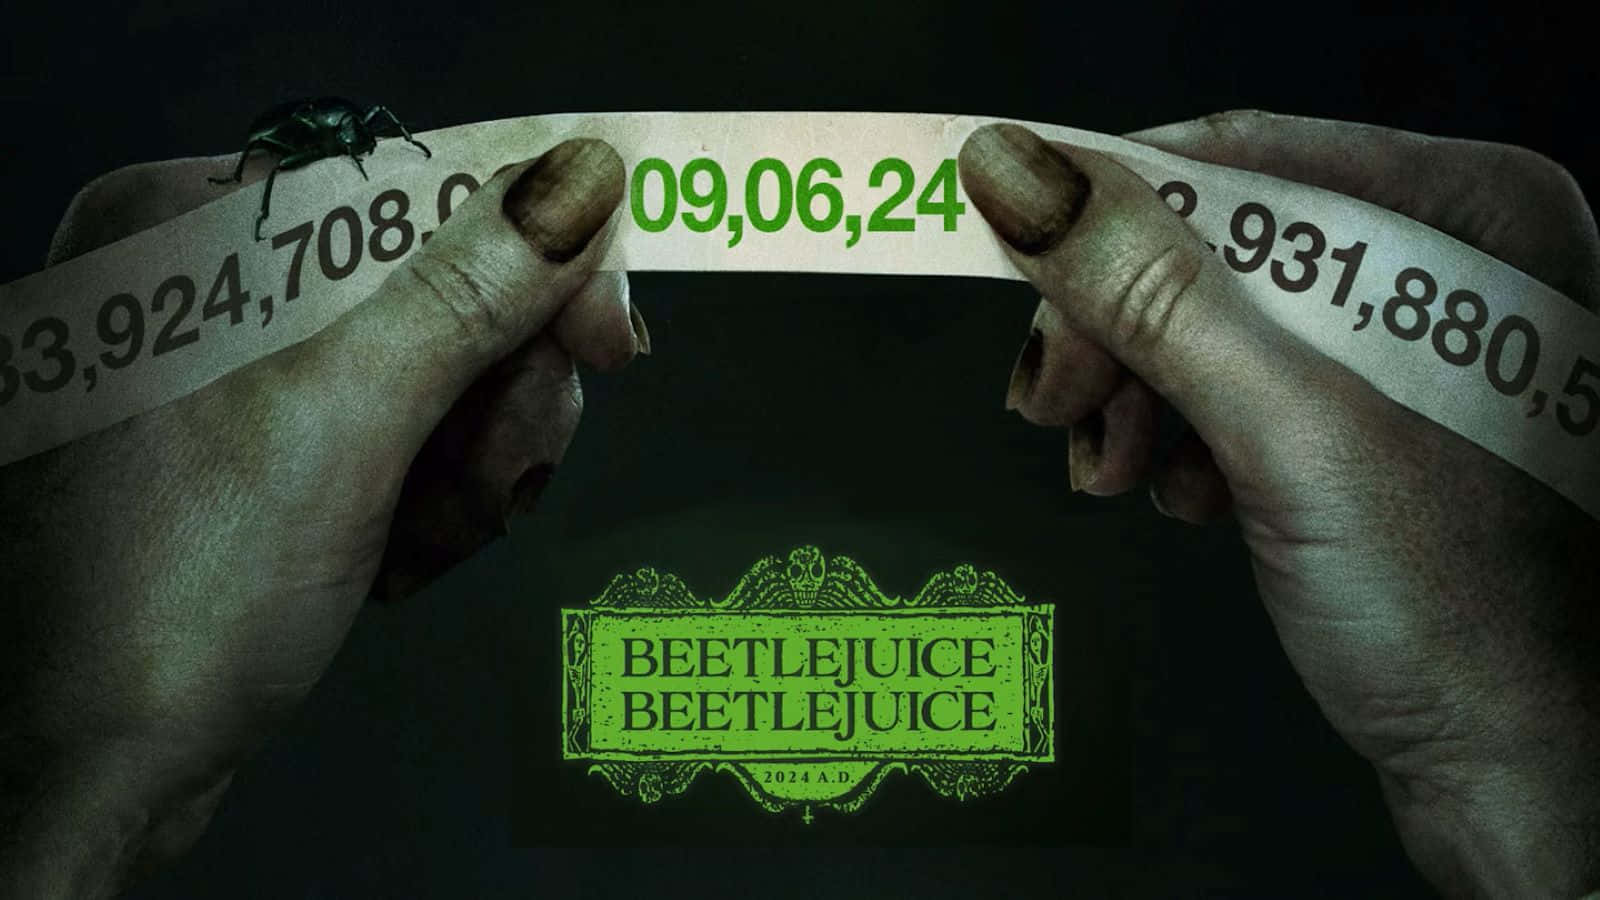 Beetlejuice2 Teaser Image Wallpaper